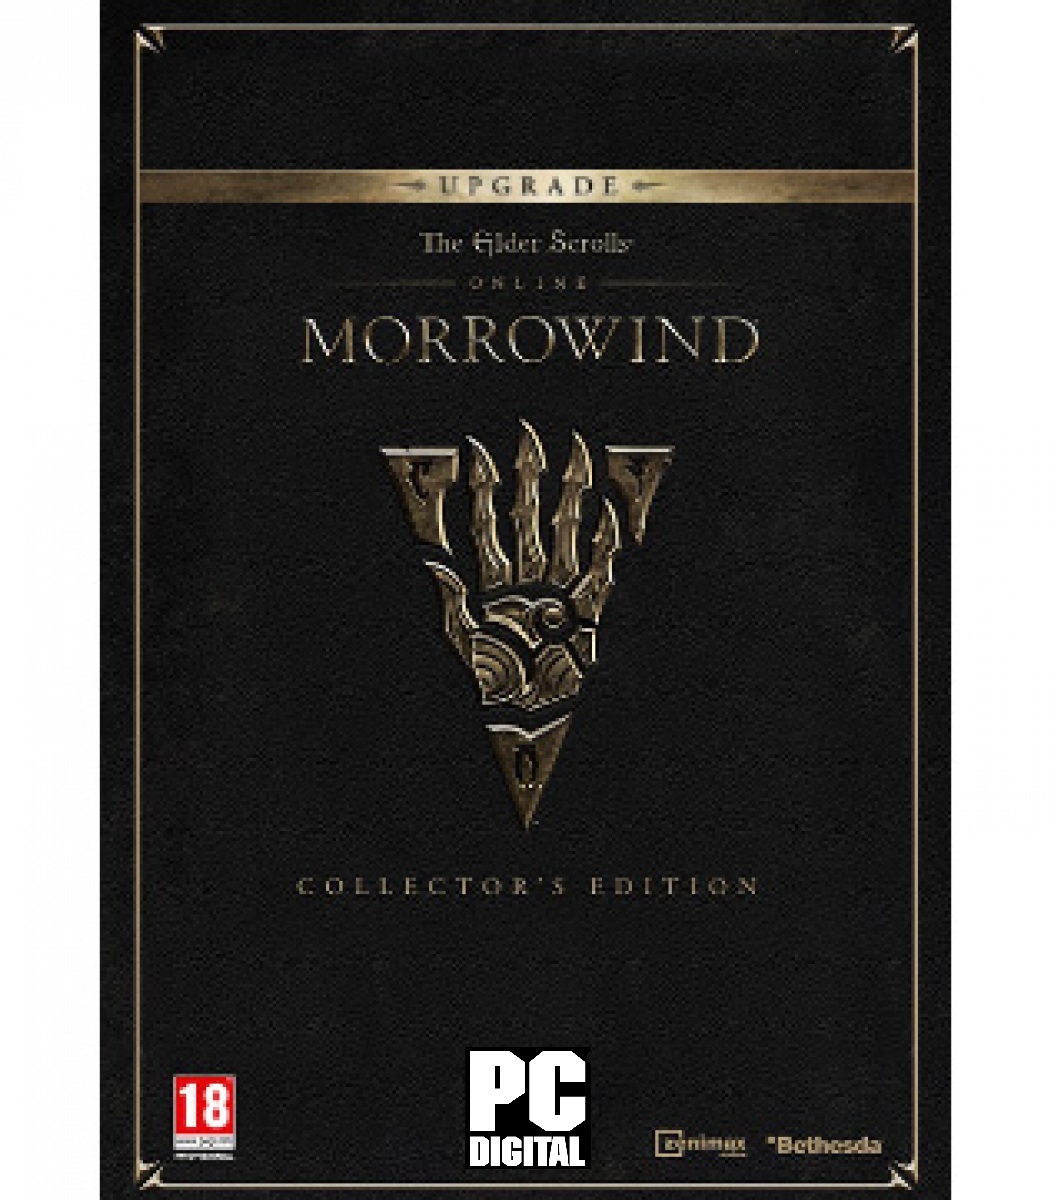 The Elder Scrolls Online: Morrowind – Digital Collector’s Edition Upgrade PC (Digital)